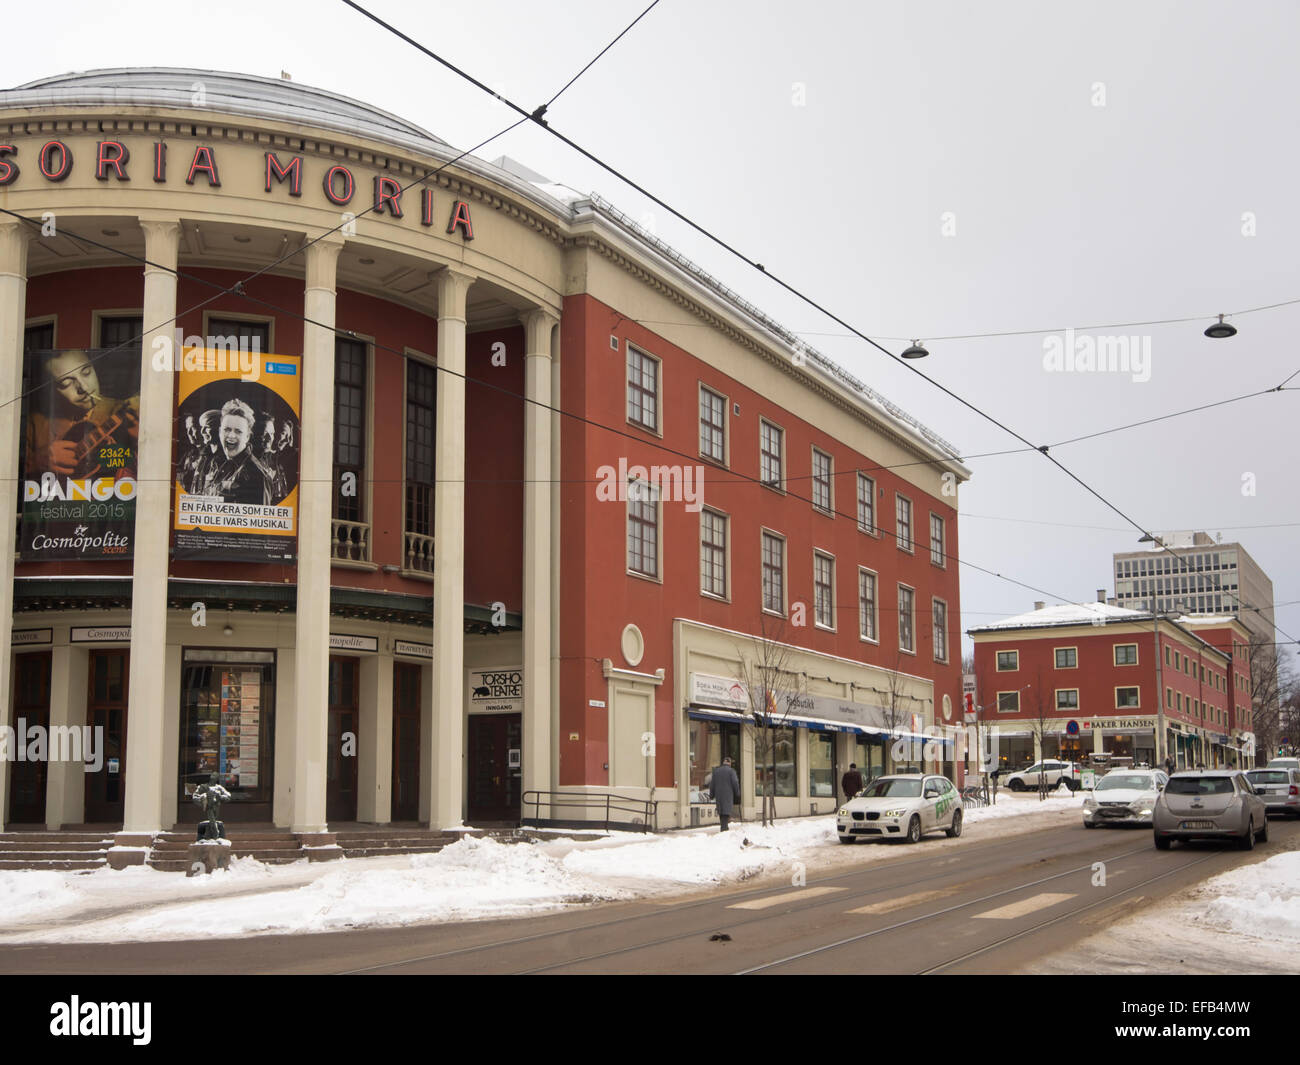 Soria Moria, theater and cinema building , concert venues, in Torshov Oslo Norway Stock Photo